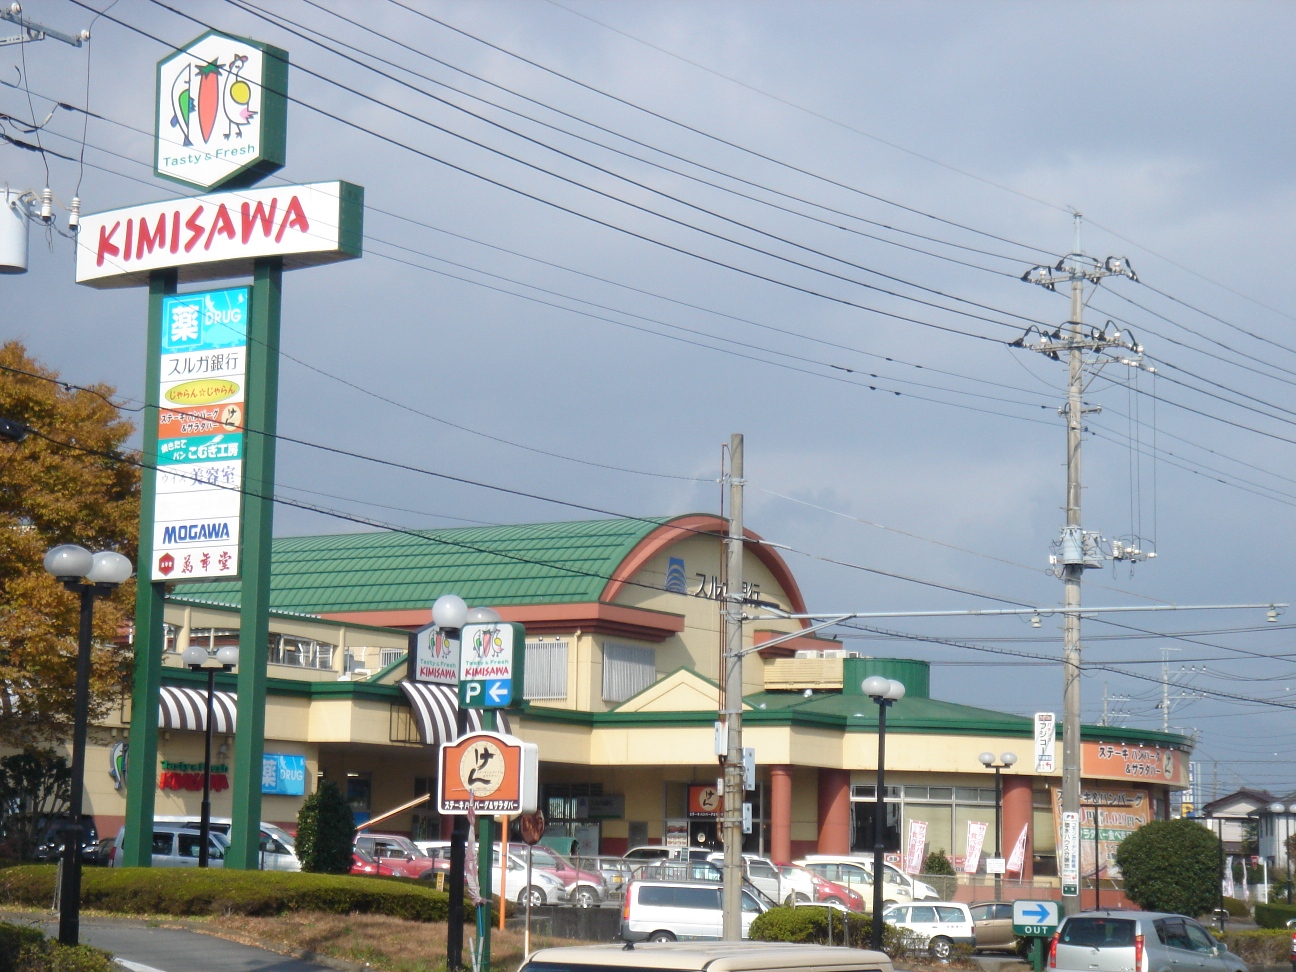 Supermarket. Kimisawa Gotemba 246 stores up to (super) 156m